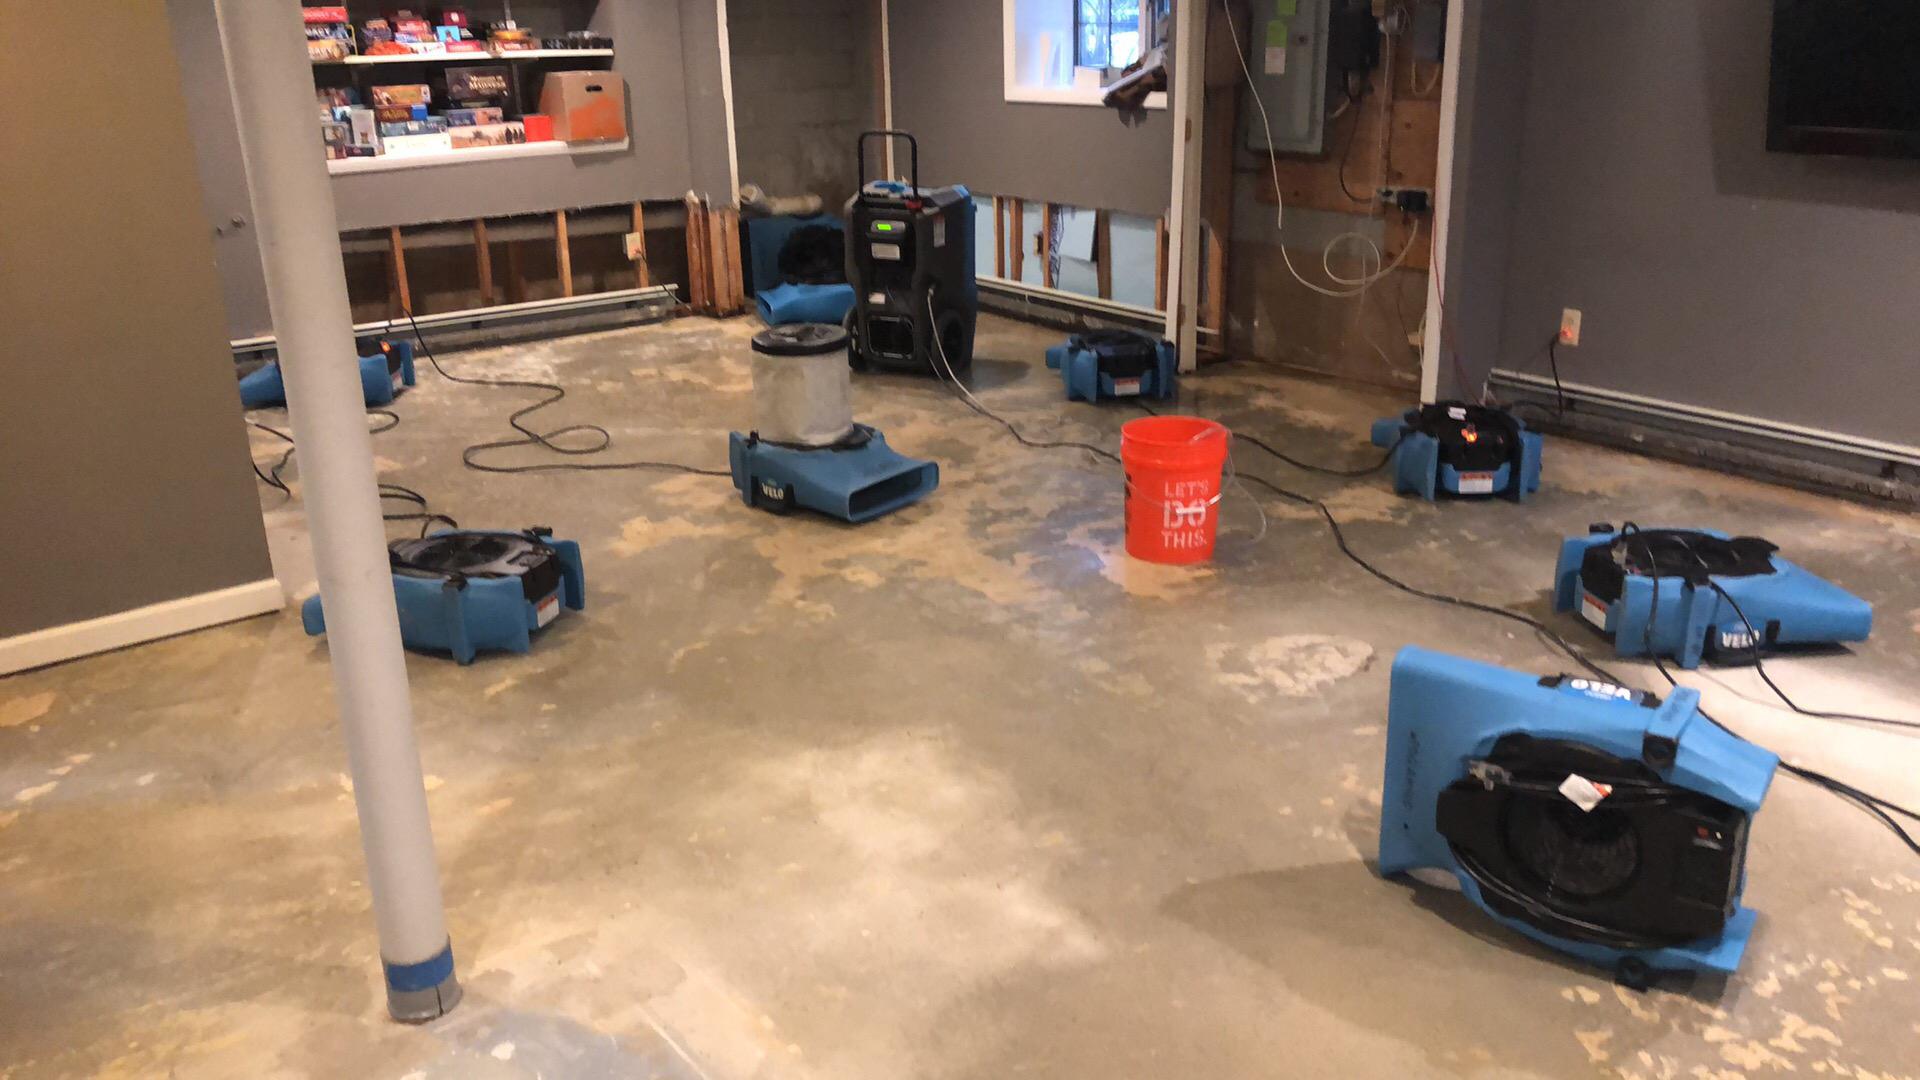 sewage restoration in basement